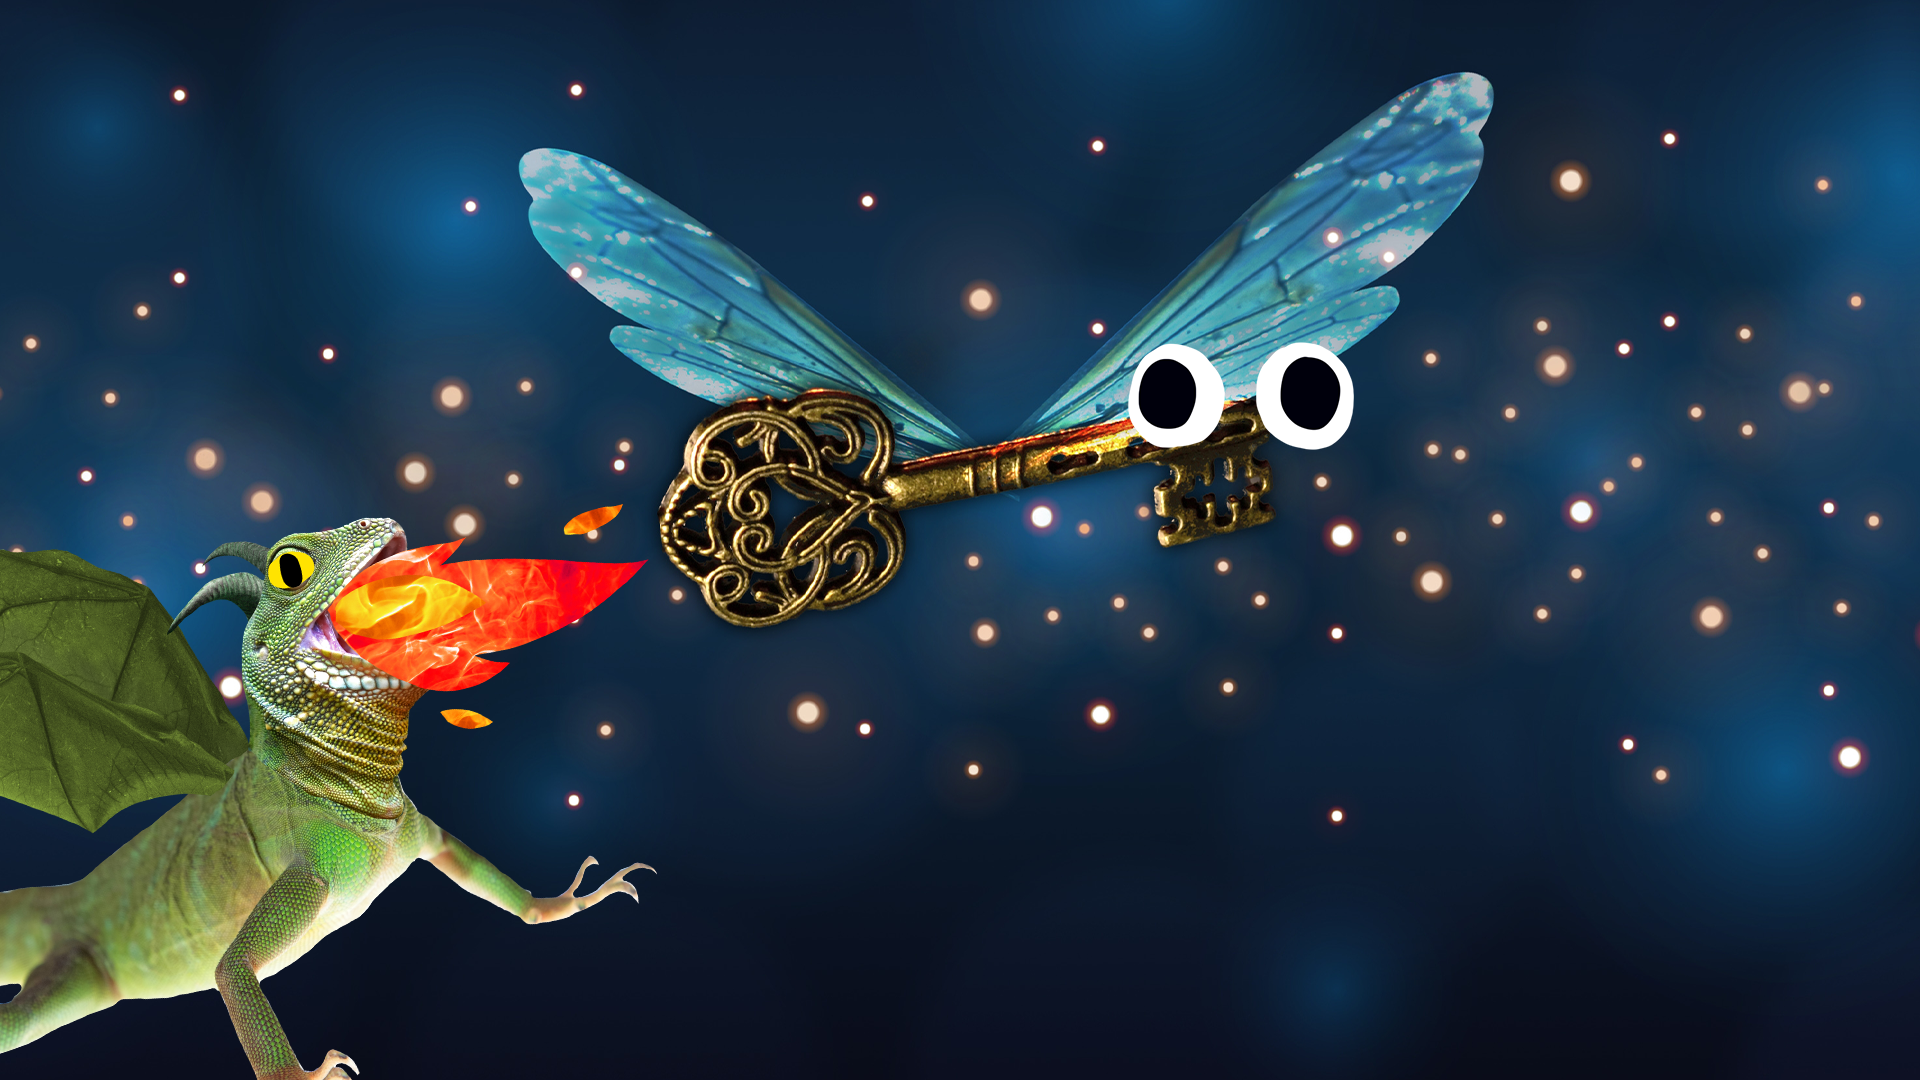 Flying key and Beano dragon